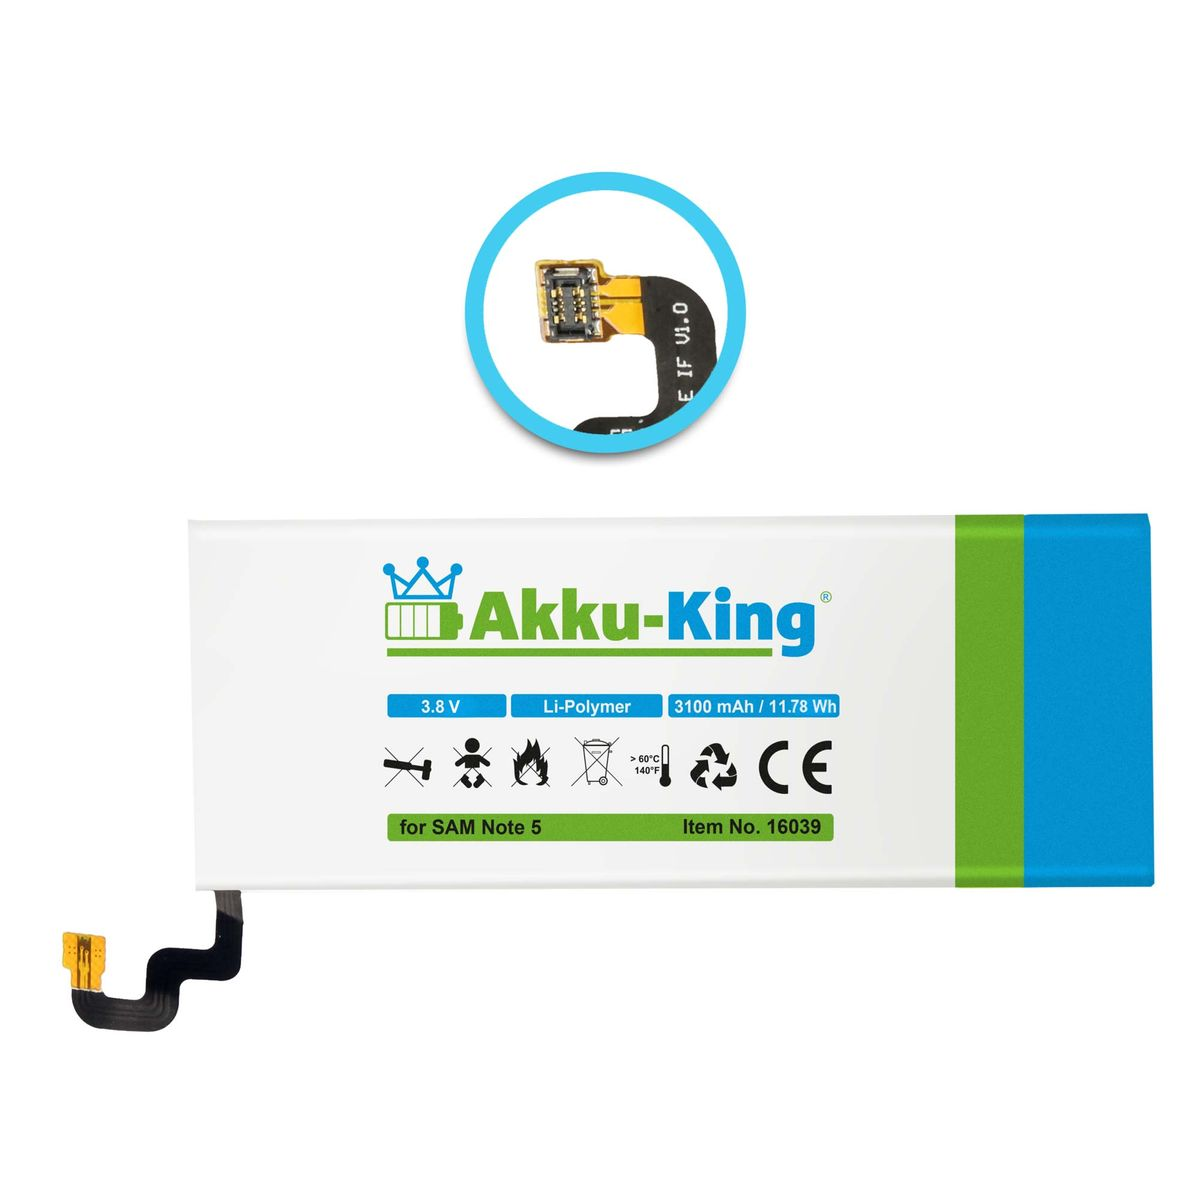 kompatibel Handy-Akku, AKKU-KING Volt, Akku EB-BN920ABE 3.8 Samsung 3100mAh Li-Polymer mit